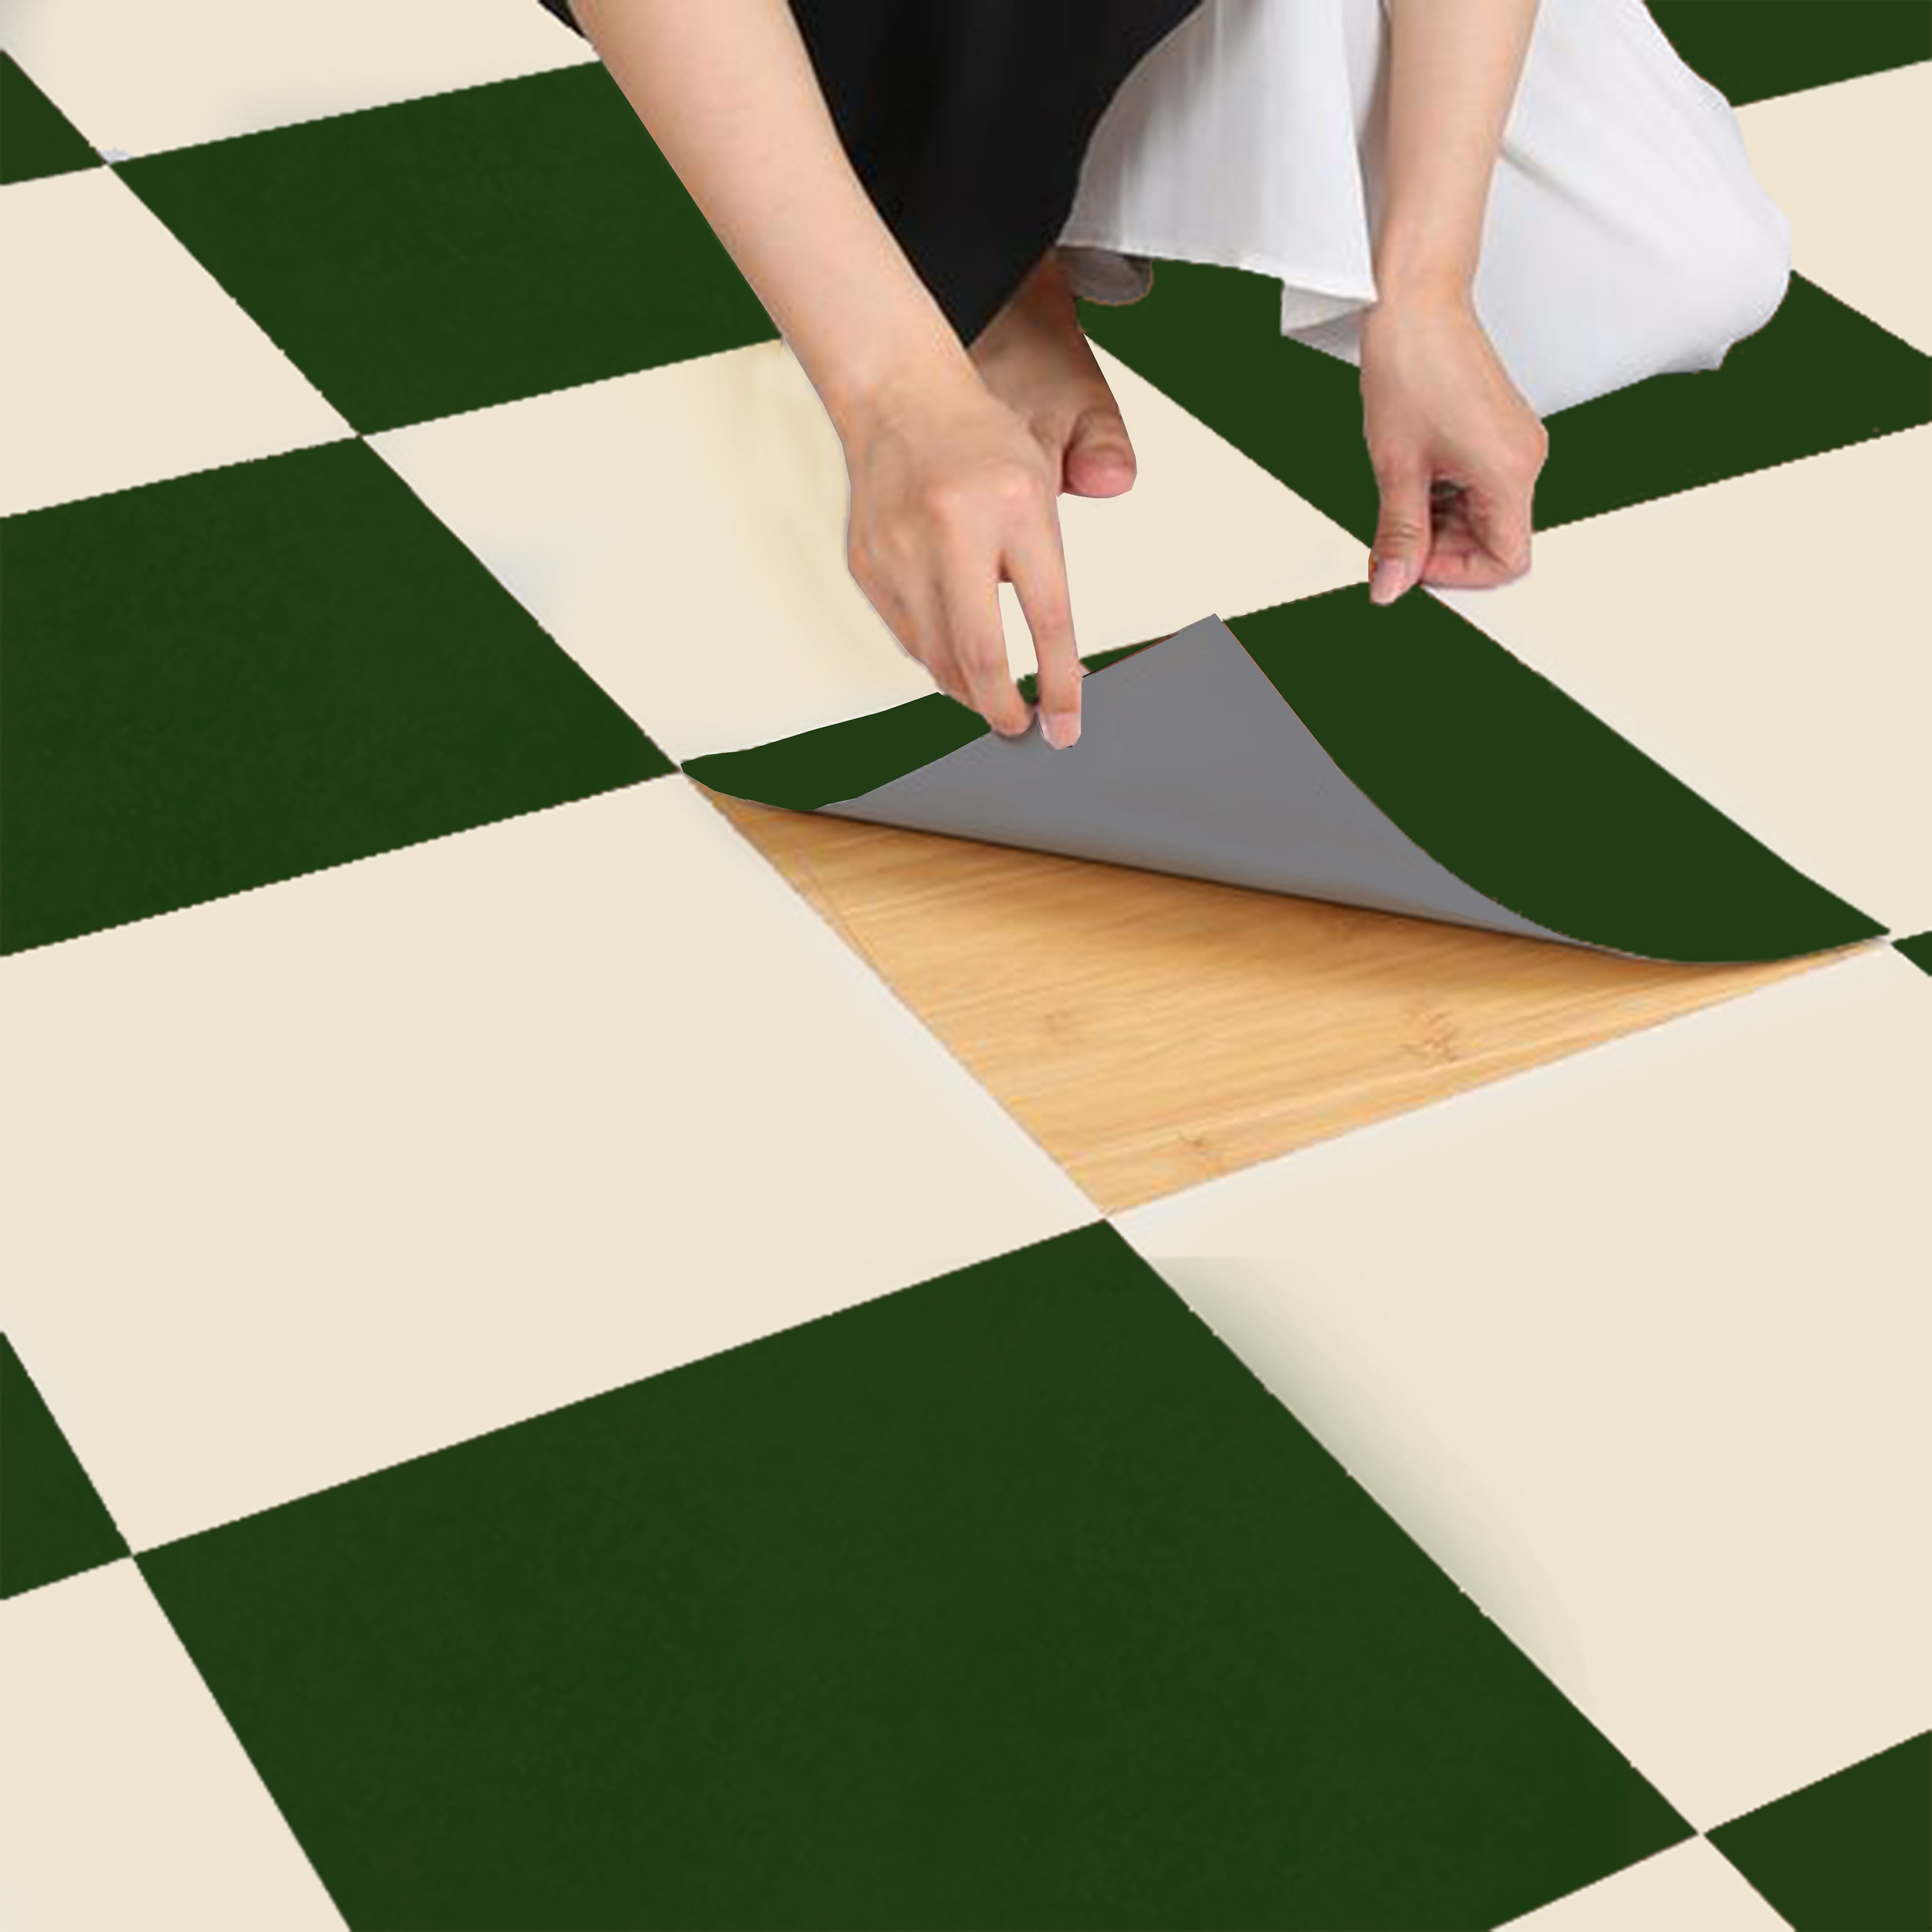 Moss Green & off White Checker Tile Wall Stair Floor Self Adhesive Vinyl  Sticker,kitchen Bathroom Backsplash Carrelage Decal, Peel and Stick -   Canada